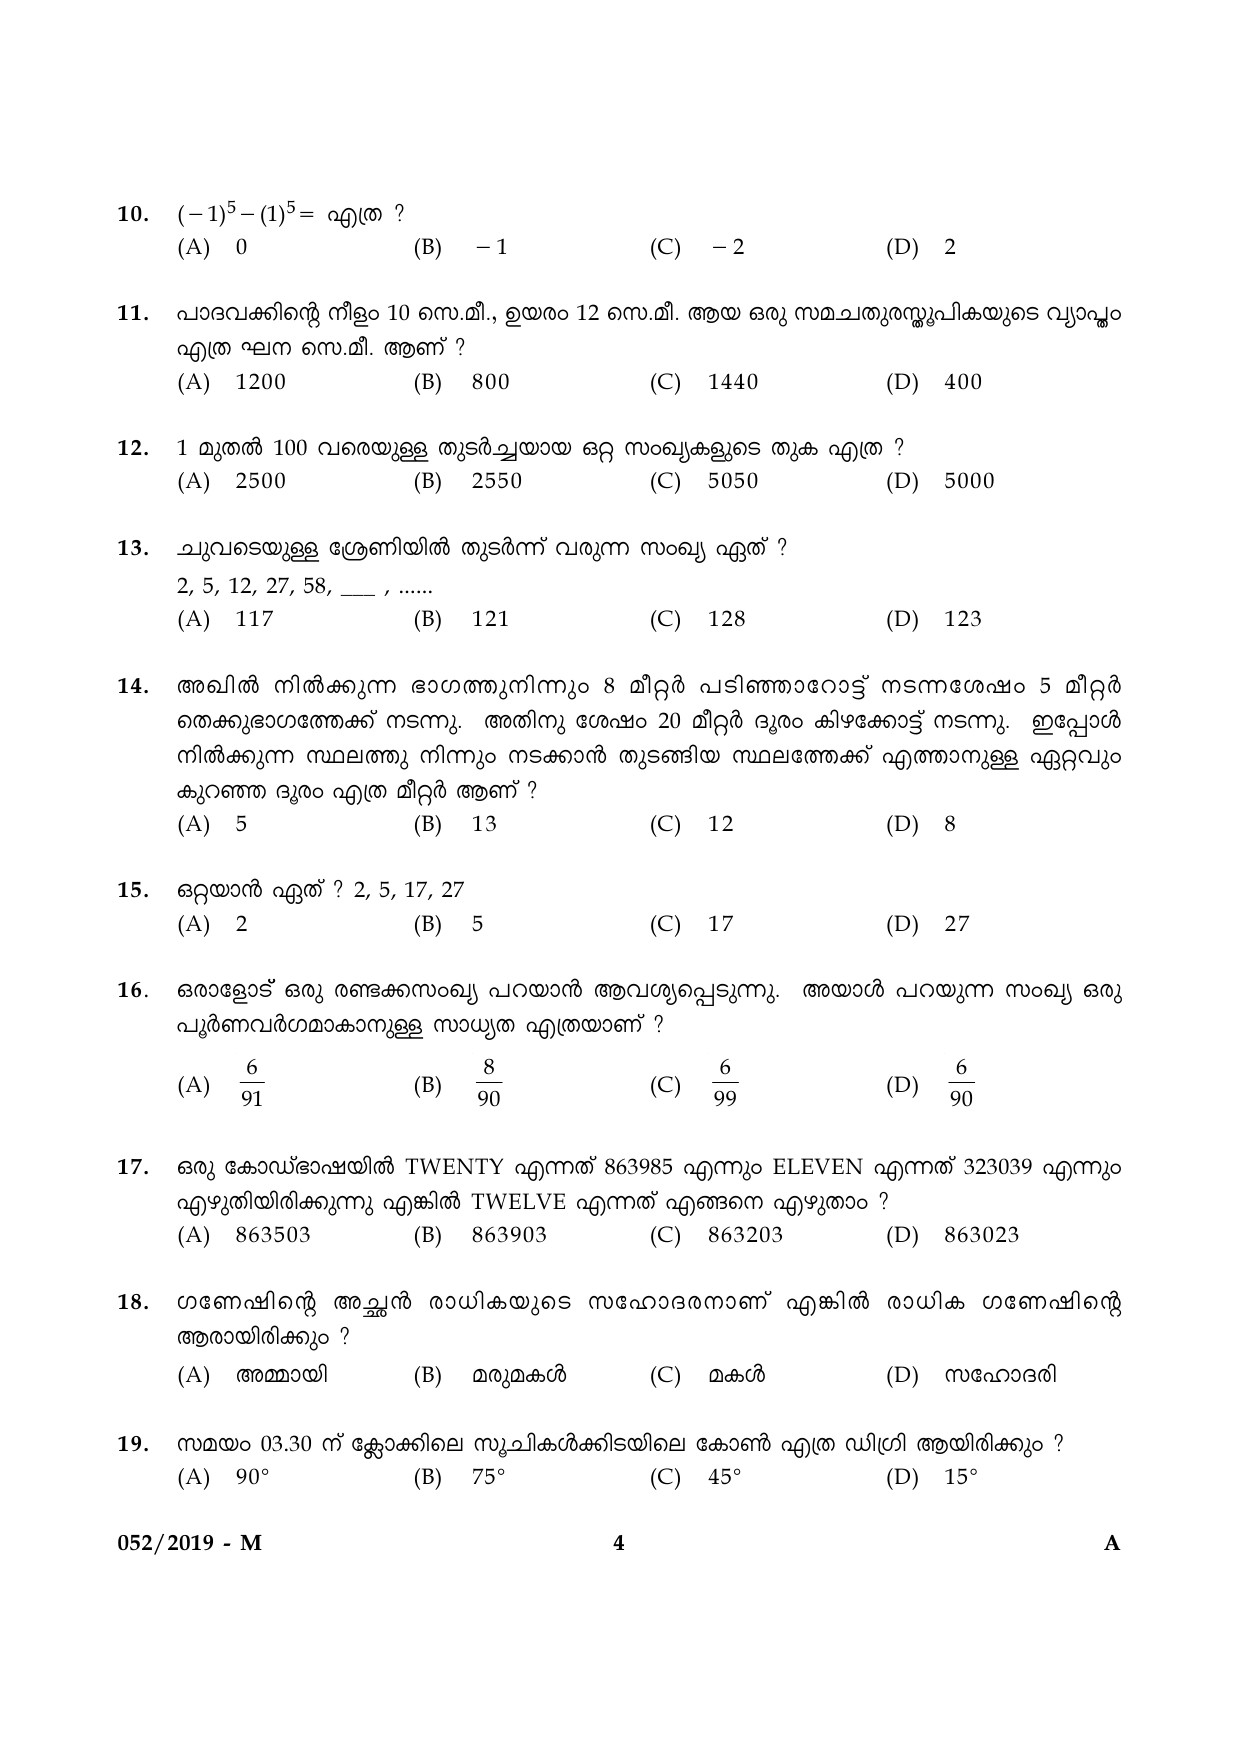 Village Extension Officer Grade II Exam Paper 2019 Code 522019 M 3